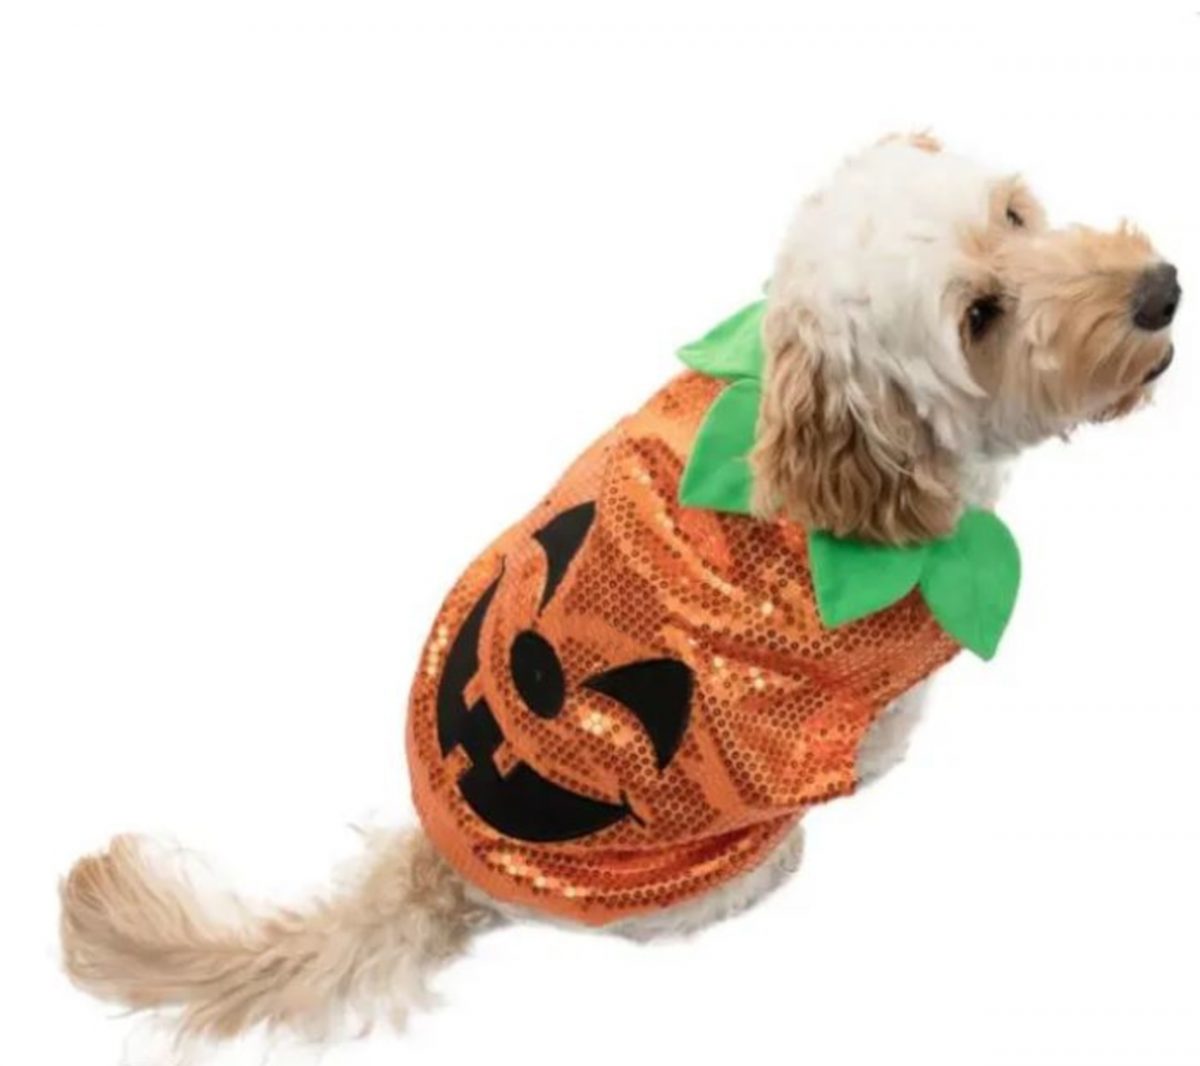 Dog wearing the pumpkin costume